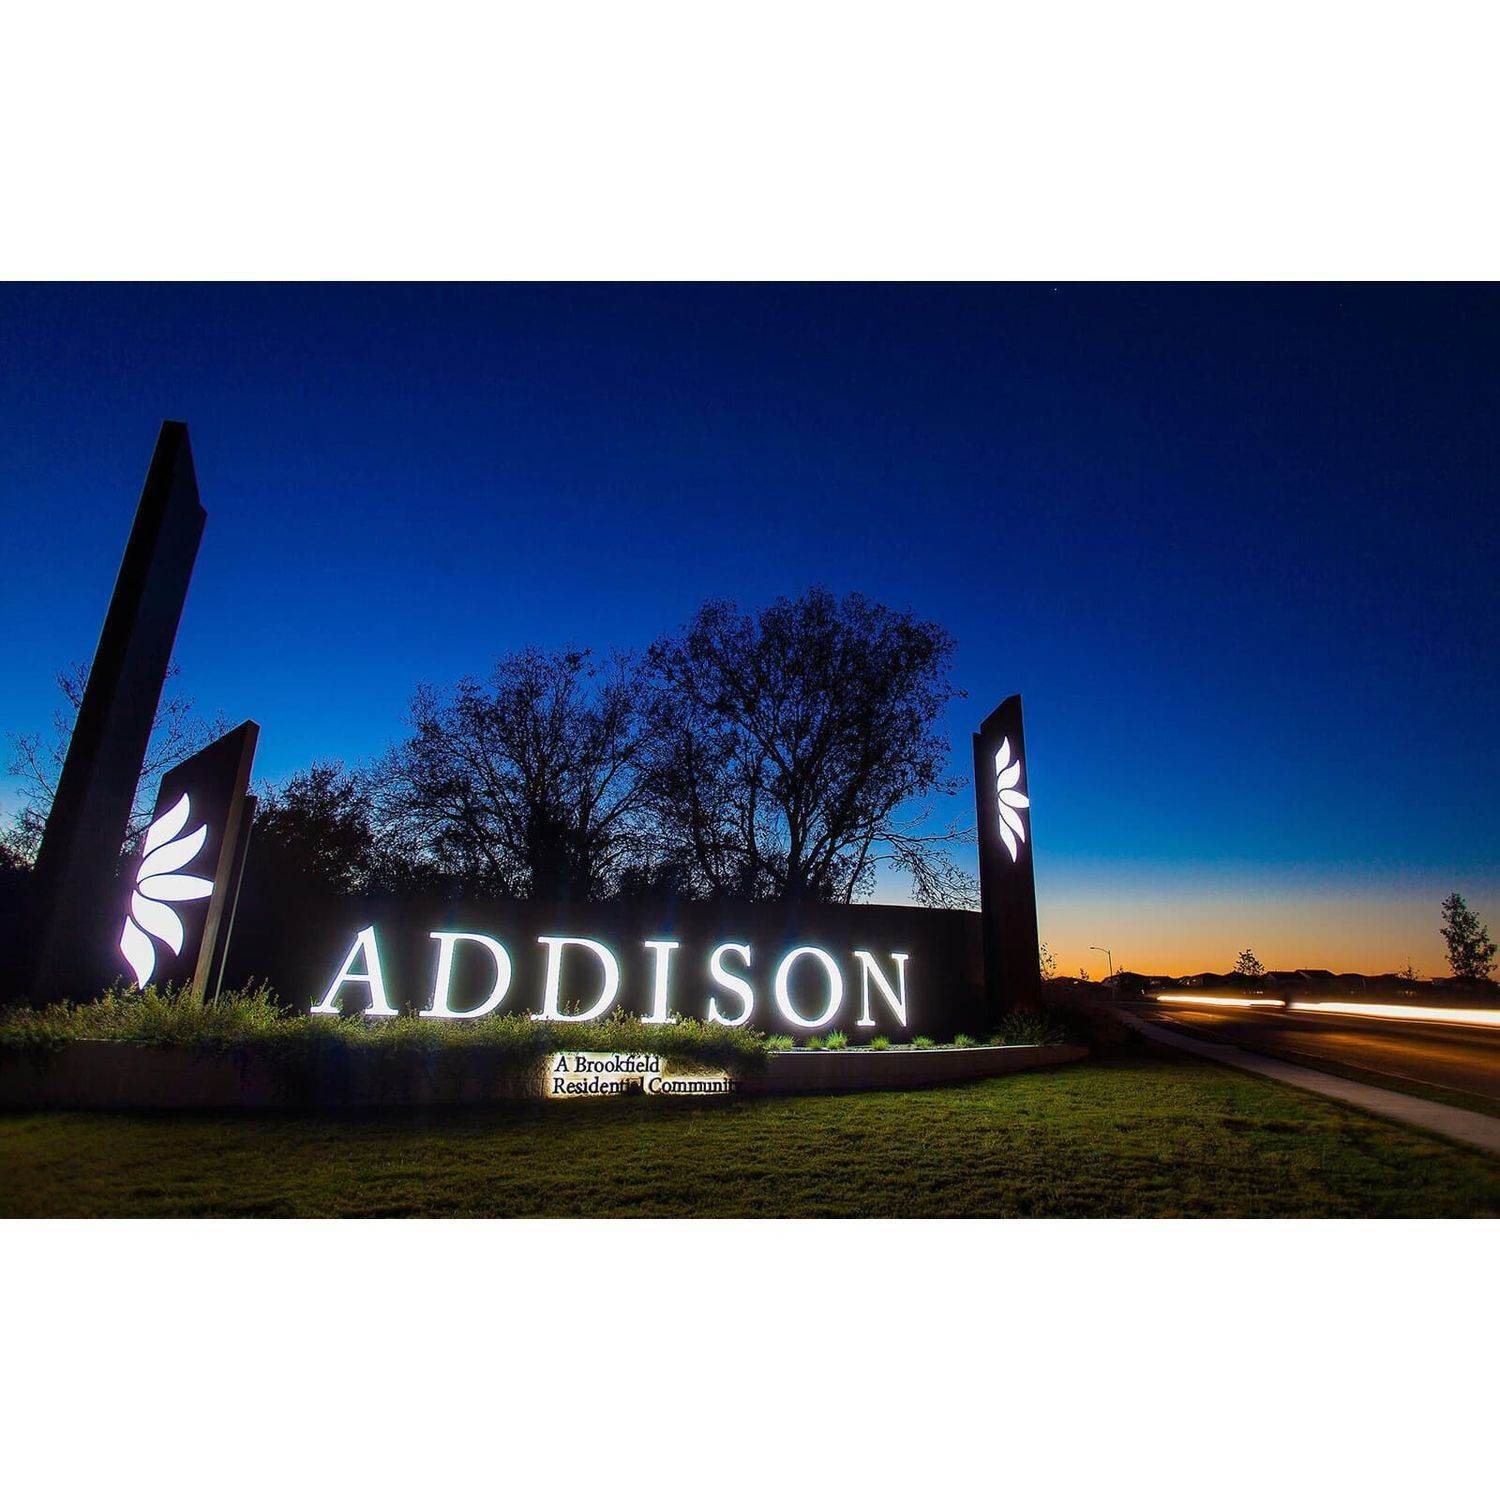 7. Addison South Neighborhood at Addison建於 8200 Greyhawk Cv., Southeast Austin, Austin, TX 78744